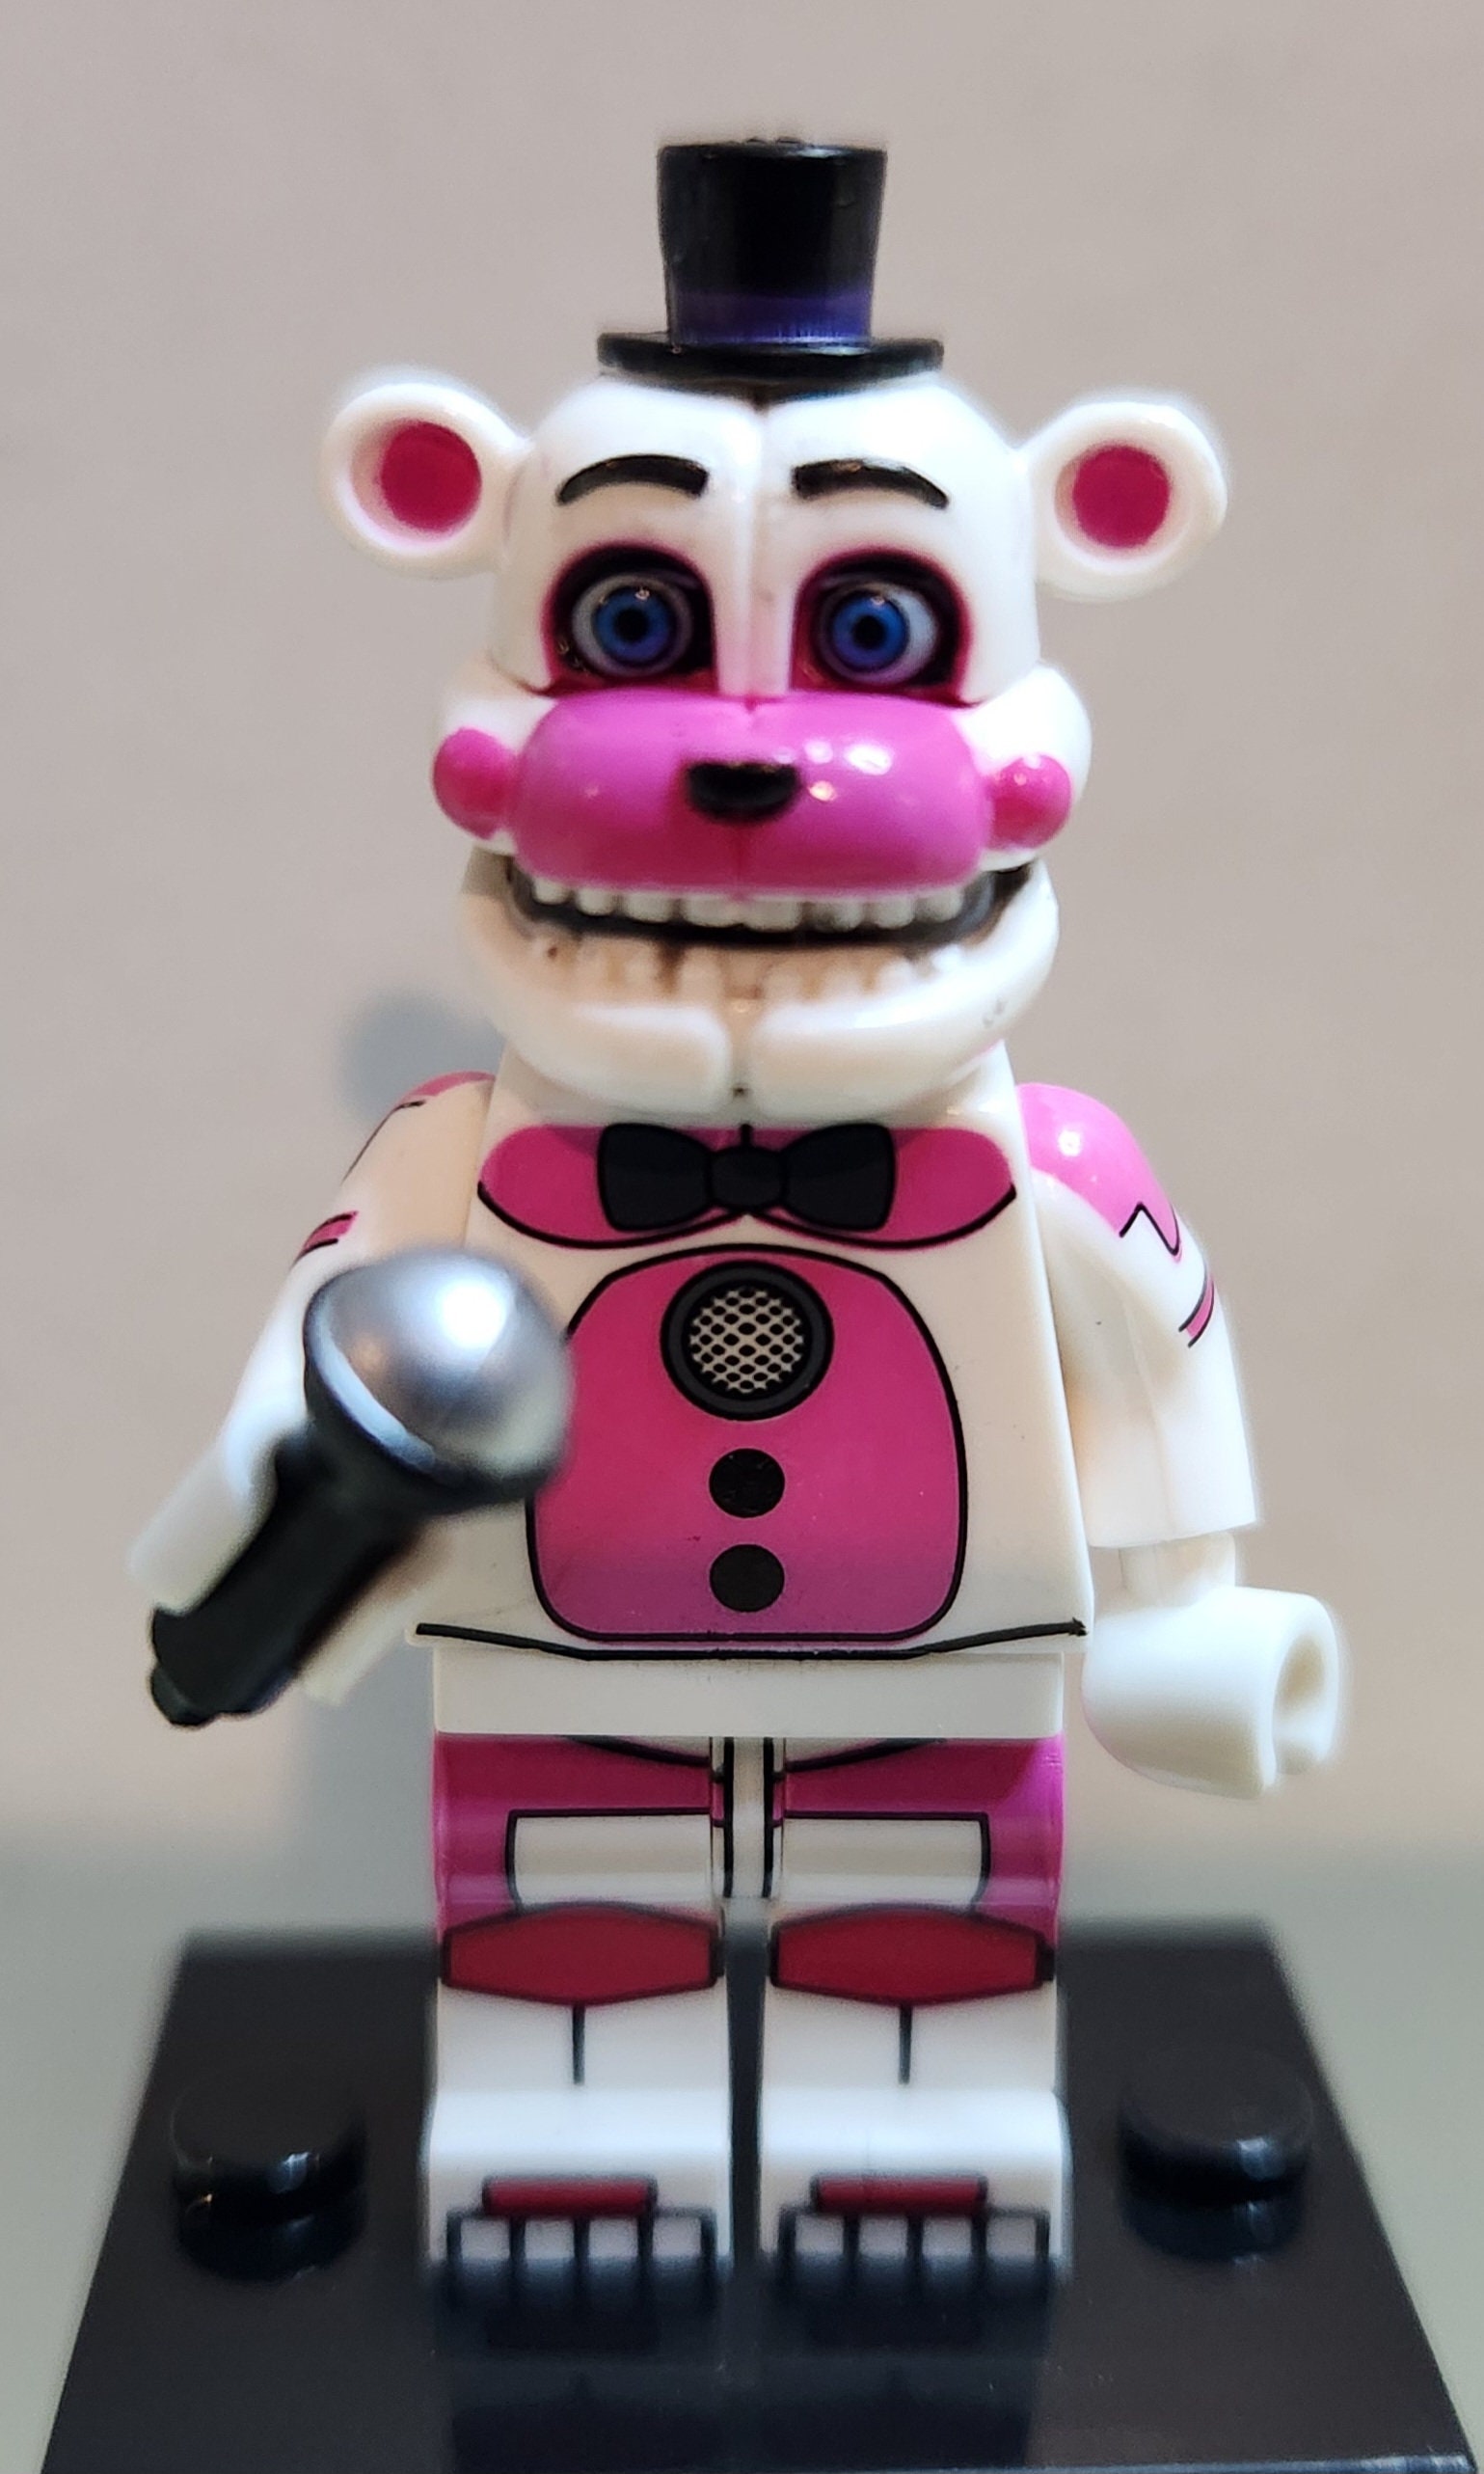 UK STOCK 2-4 DAYS Five Nights Freddy's Mini Figures Fit Lego FNAF